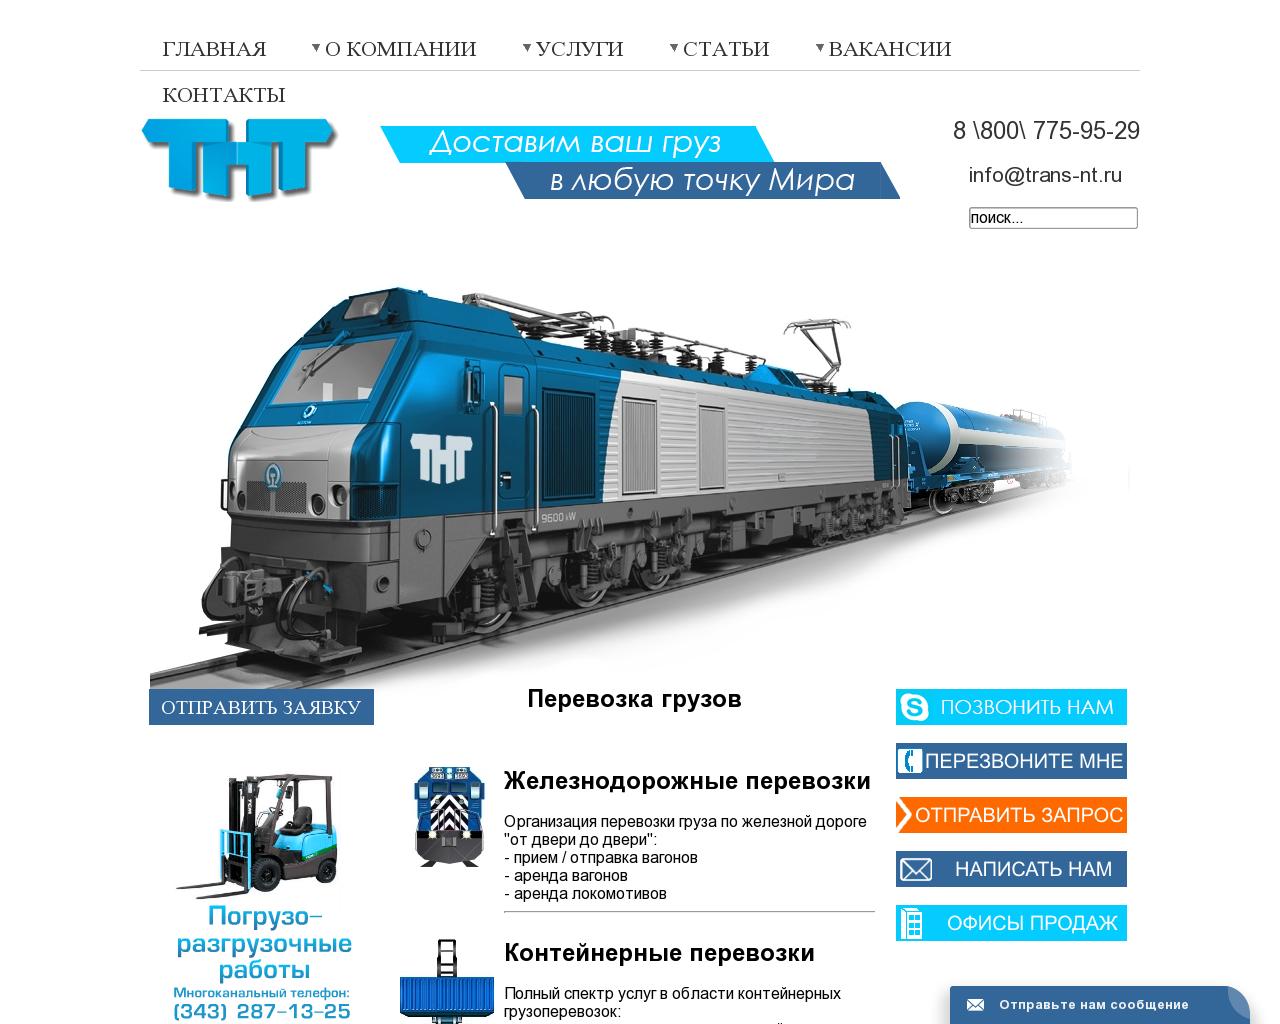 Изображение сайта trans-nt.ru в разрешении 1280x1024